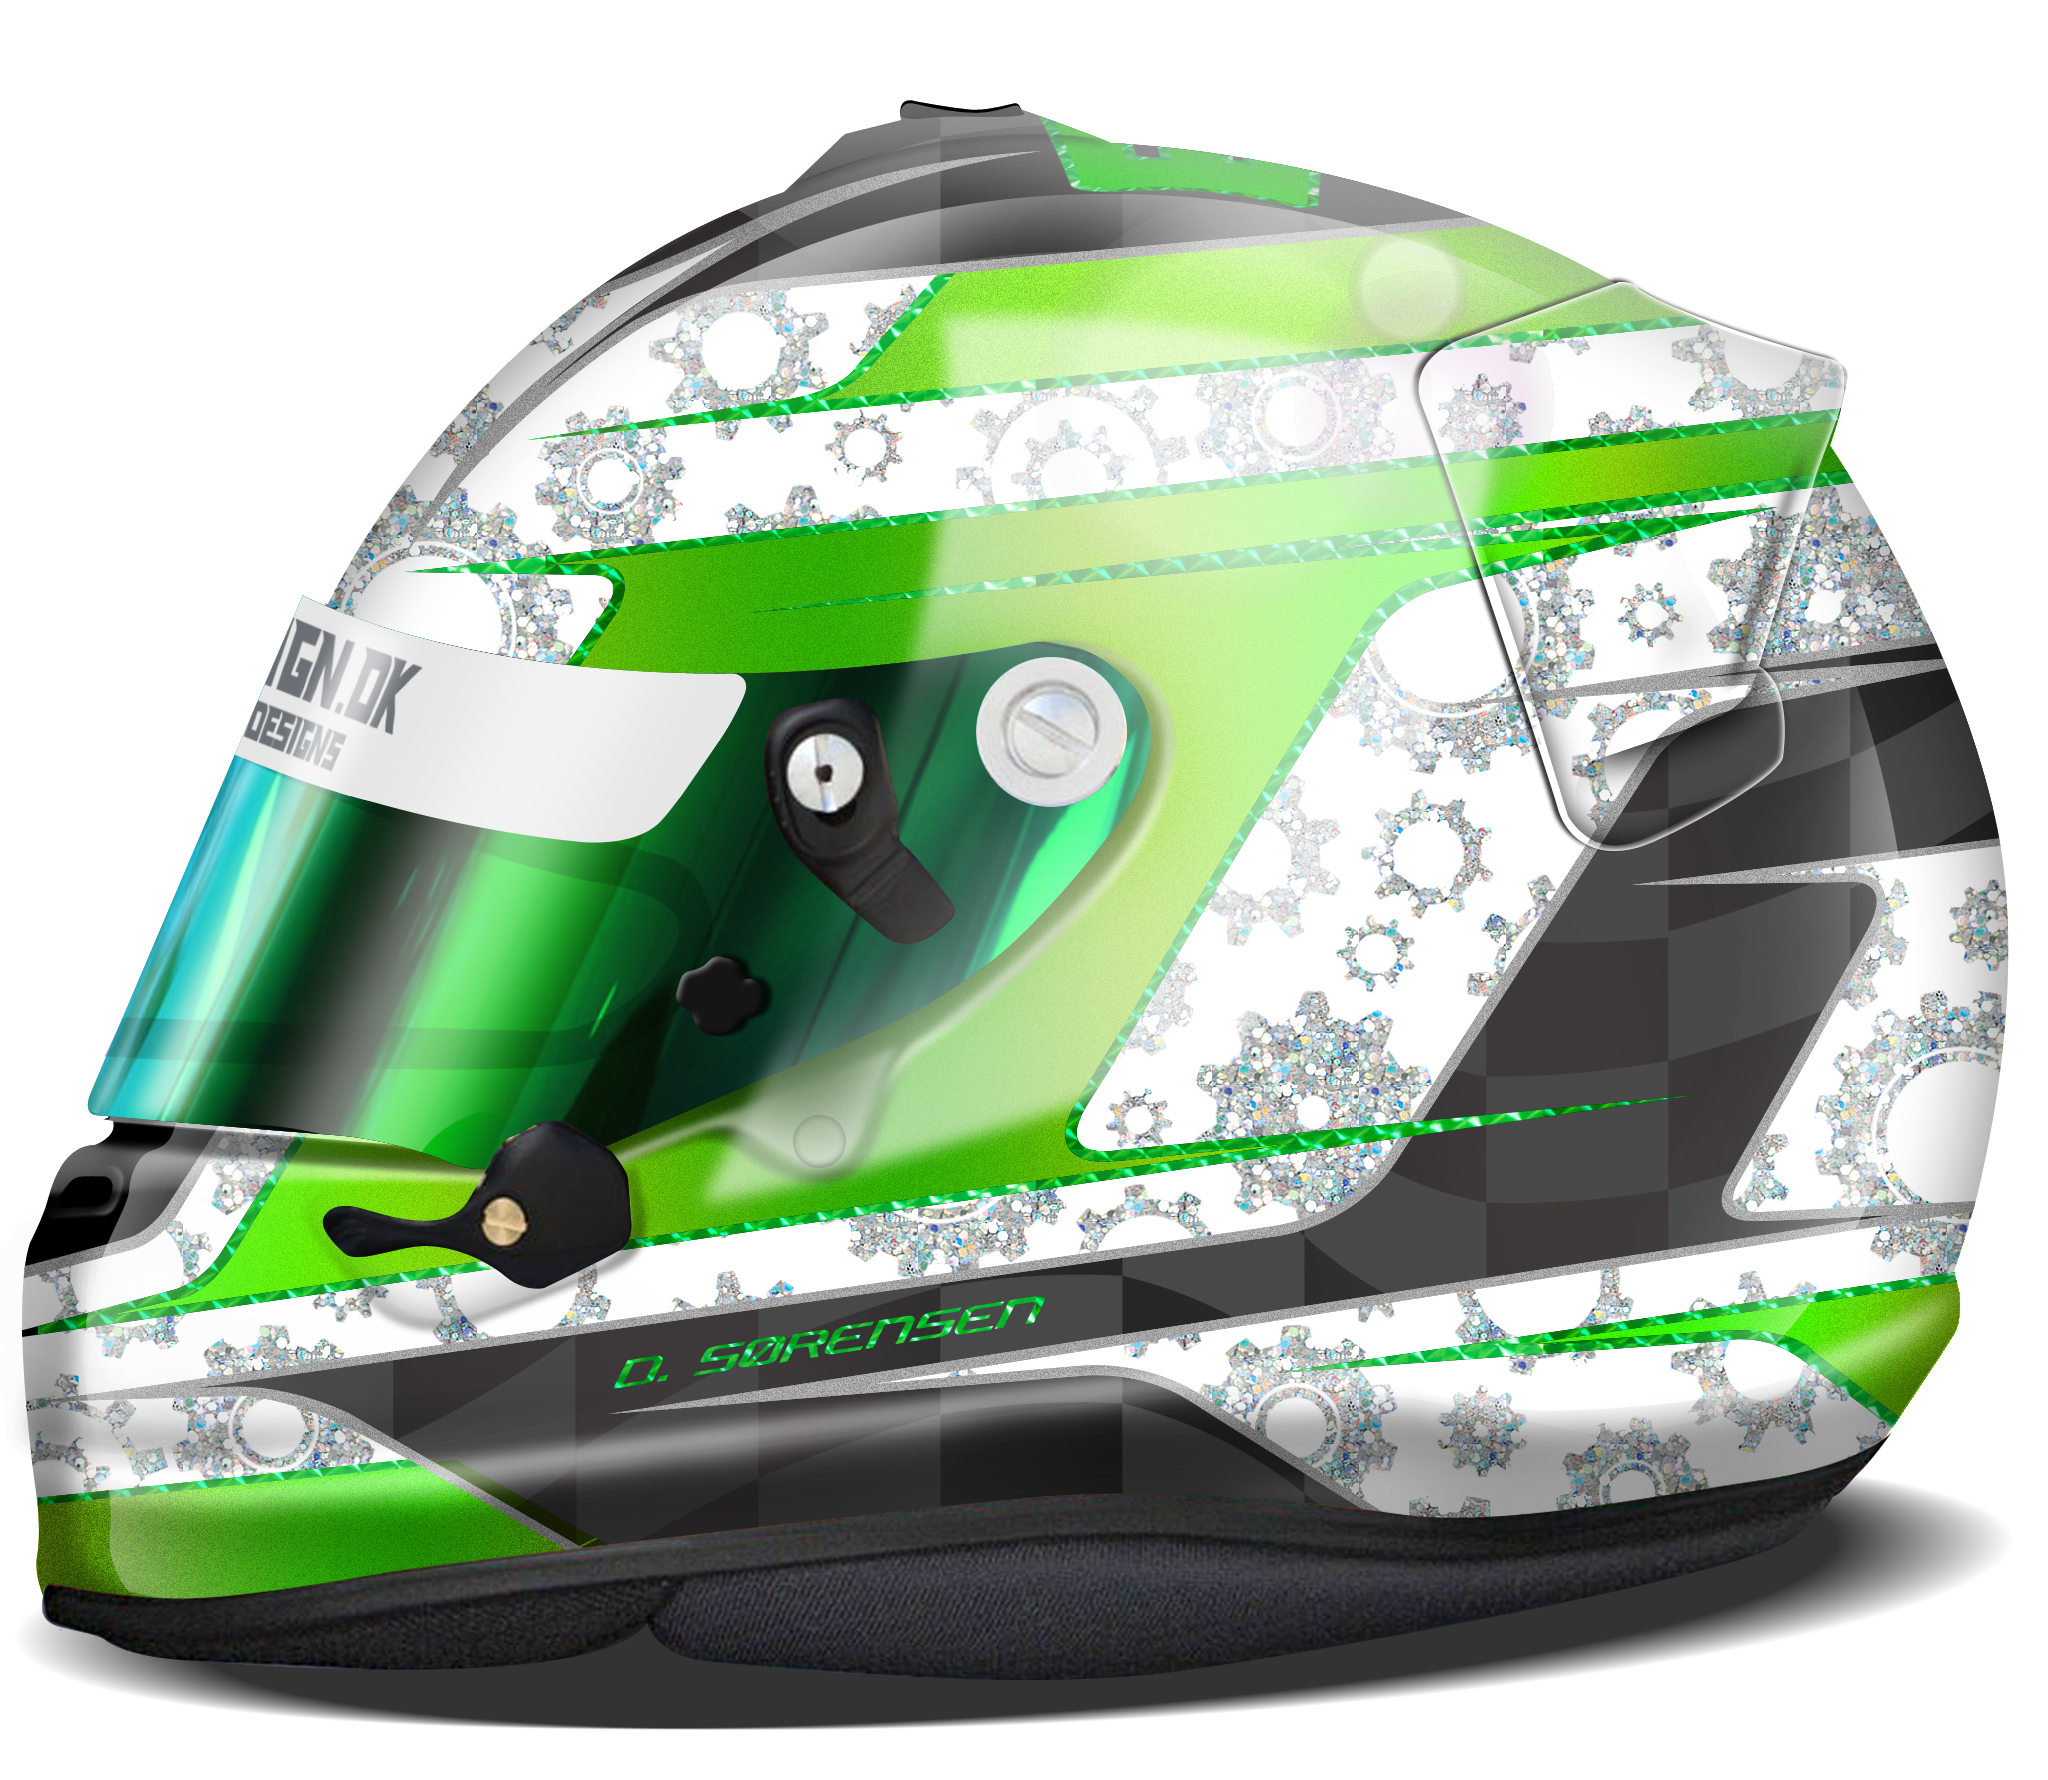 Helmet designs | NJ Design | Custom helmet design | Helmet paint